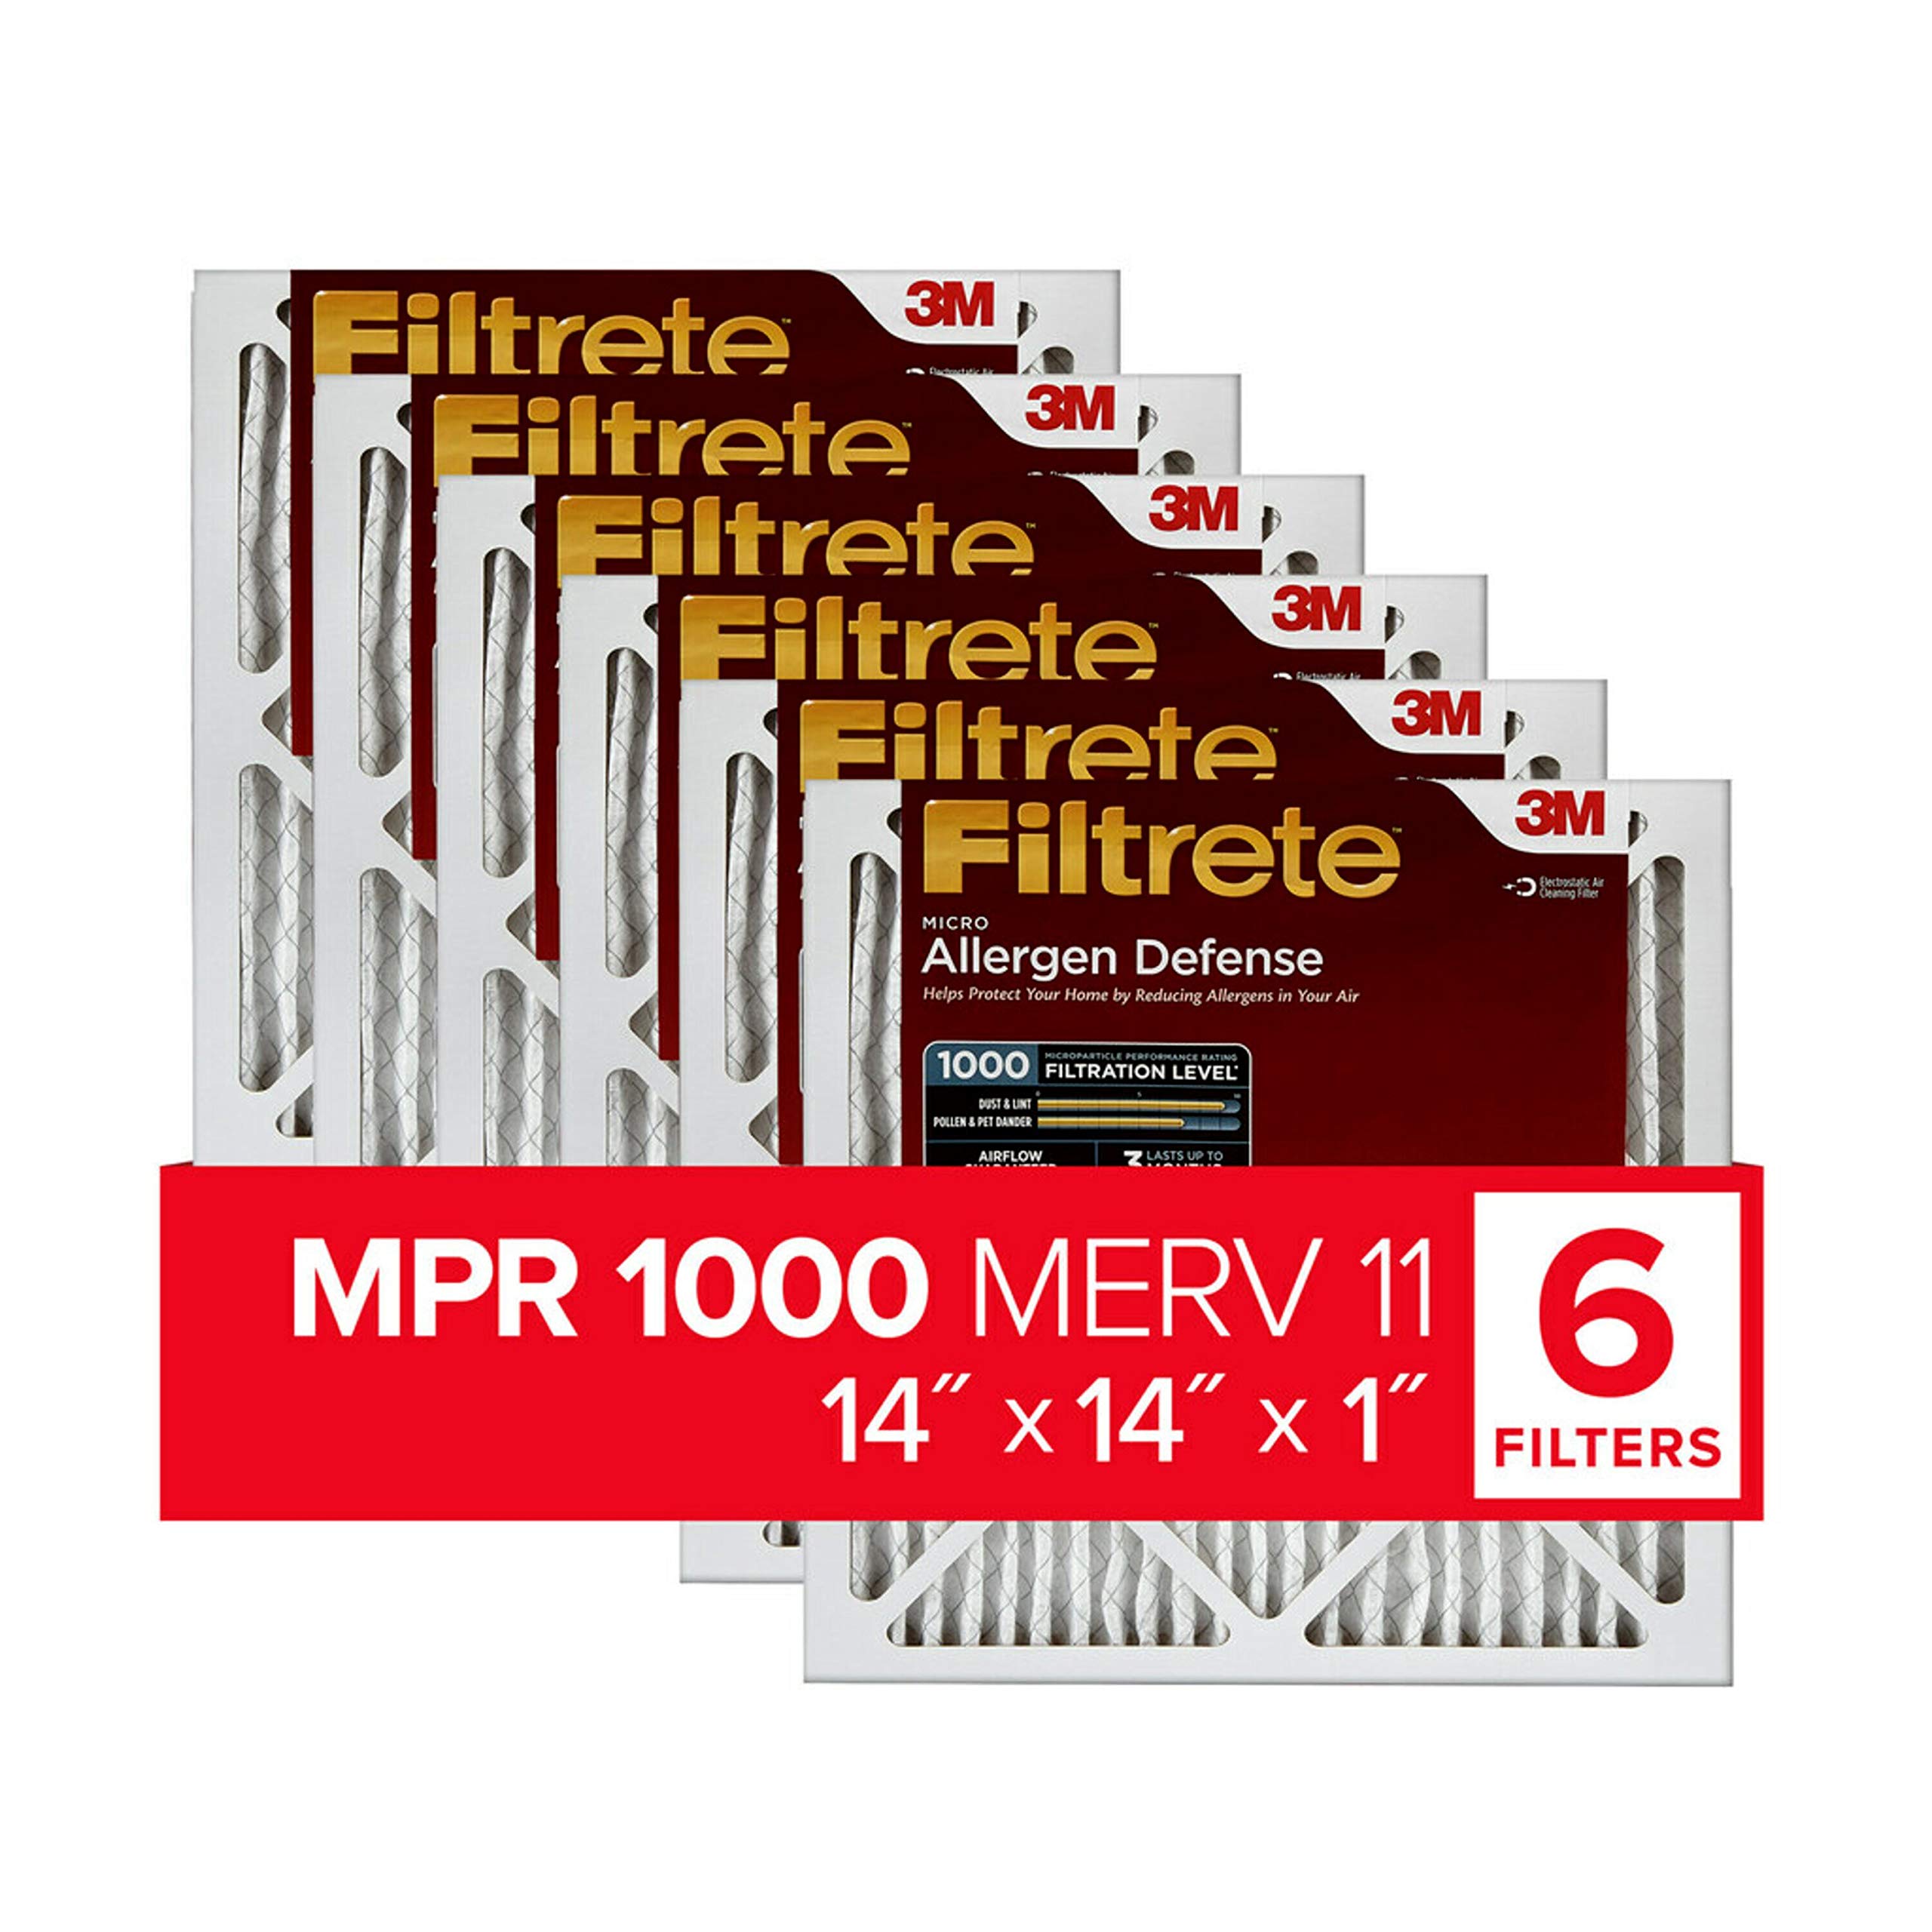 Filtrete 14x14x1 空气过滤器 MPR 1000 MERV 11，过敏原防御，6 件装（精确尺寸 13.81x13.81x0.81）